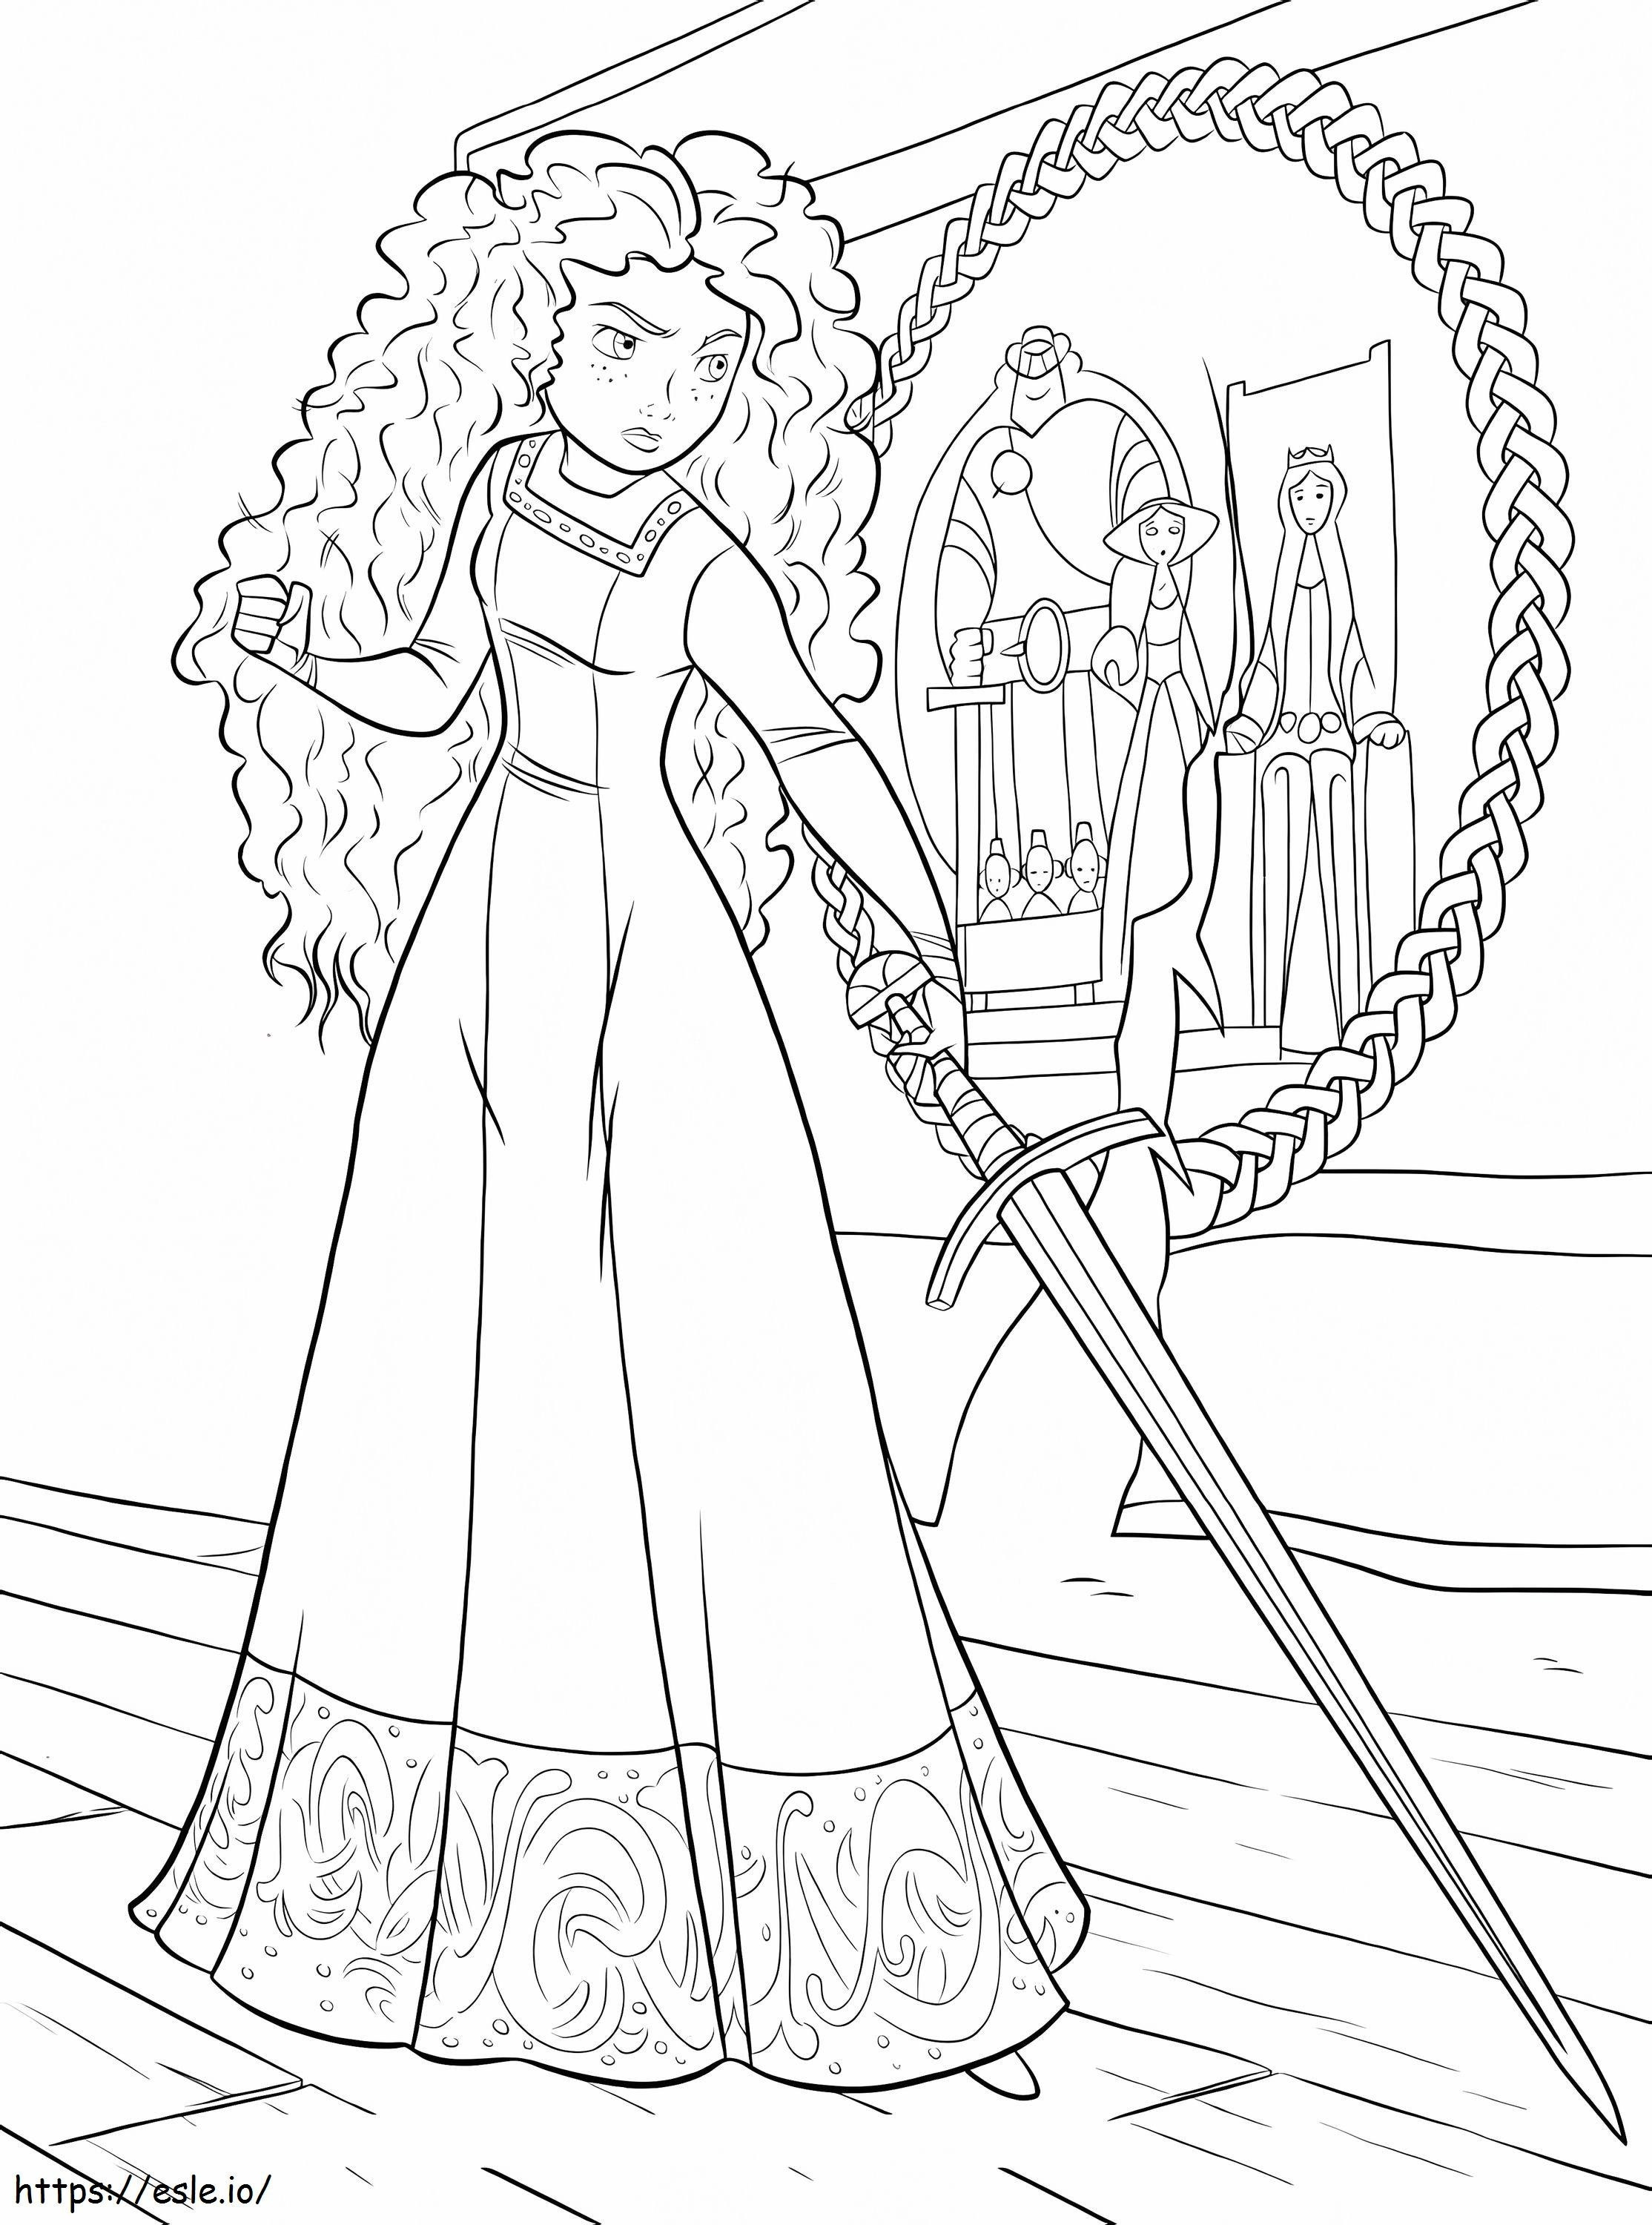 Princess Merida With Sword coloring page